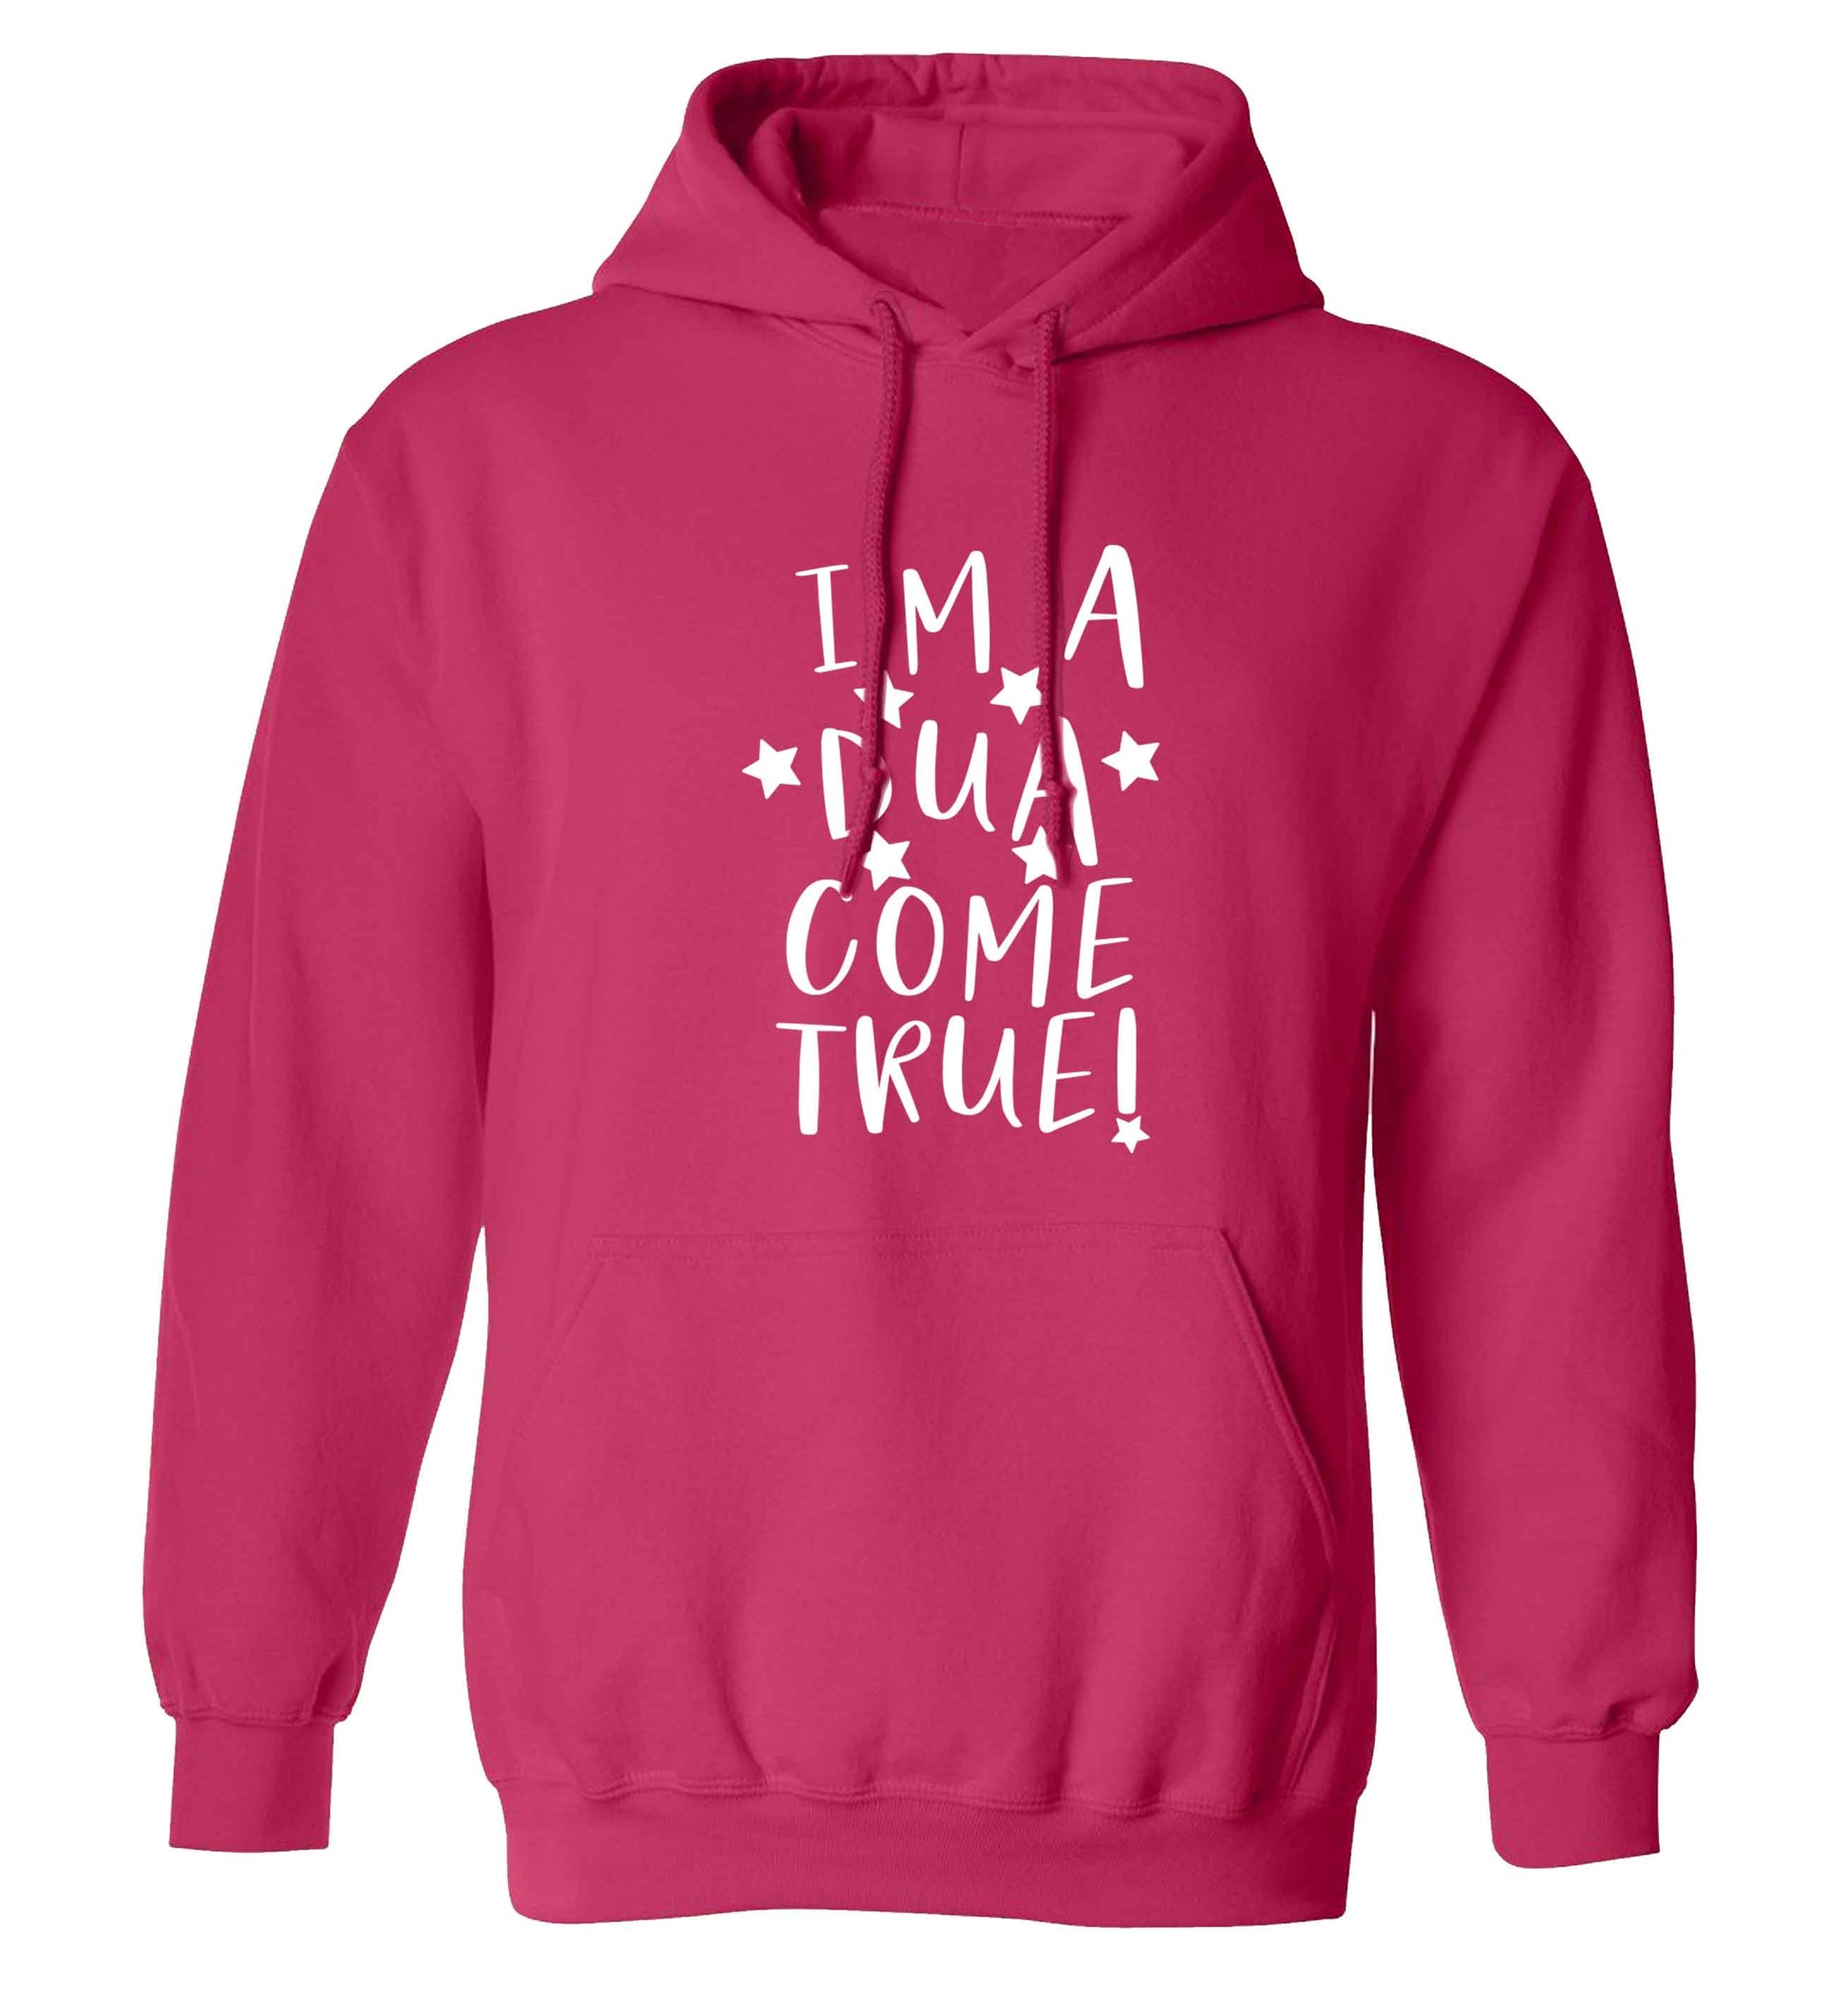 I'm a dua come true adults unisex pink hoodie 2XL